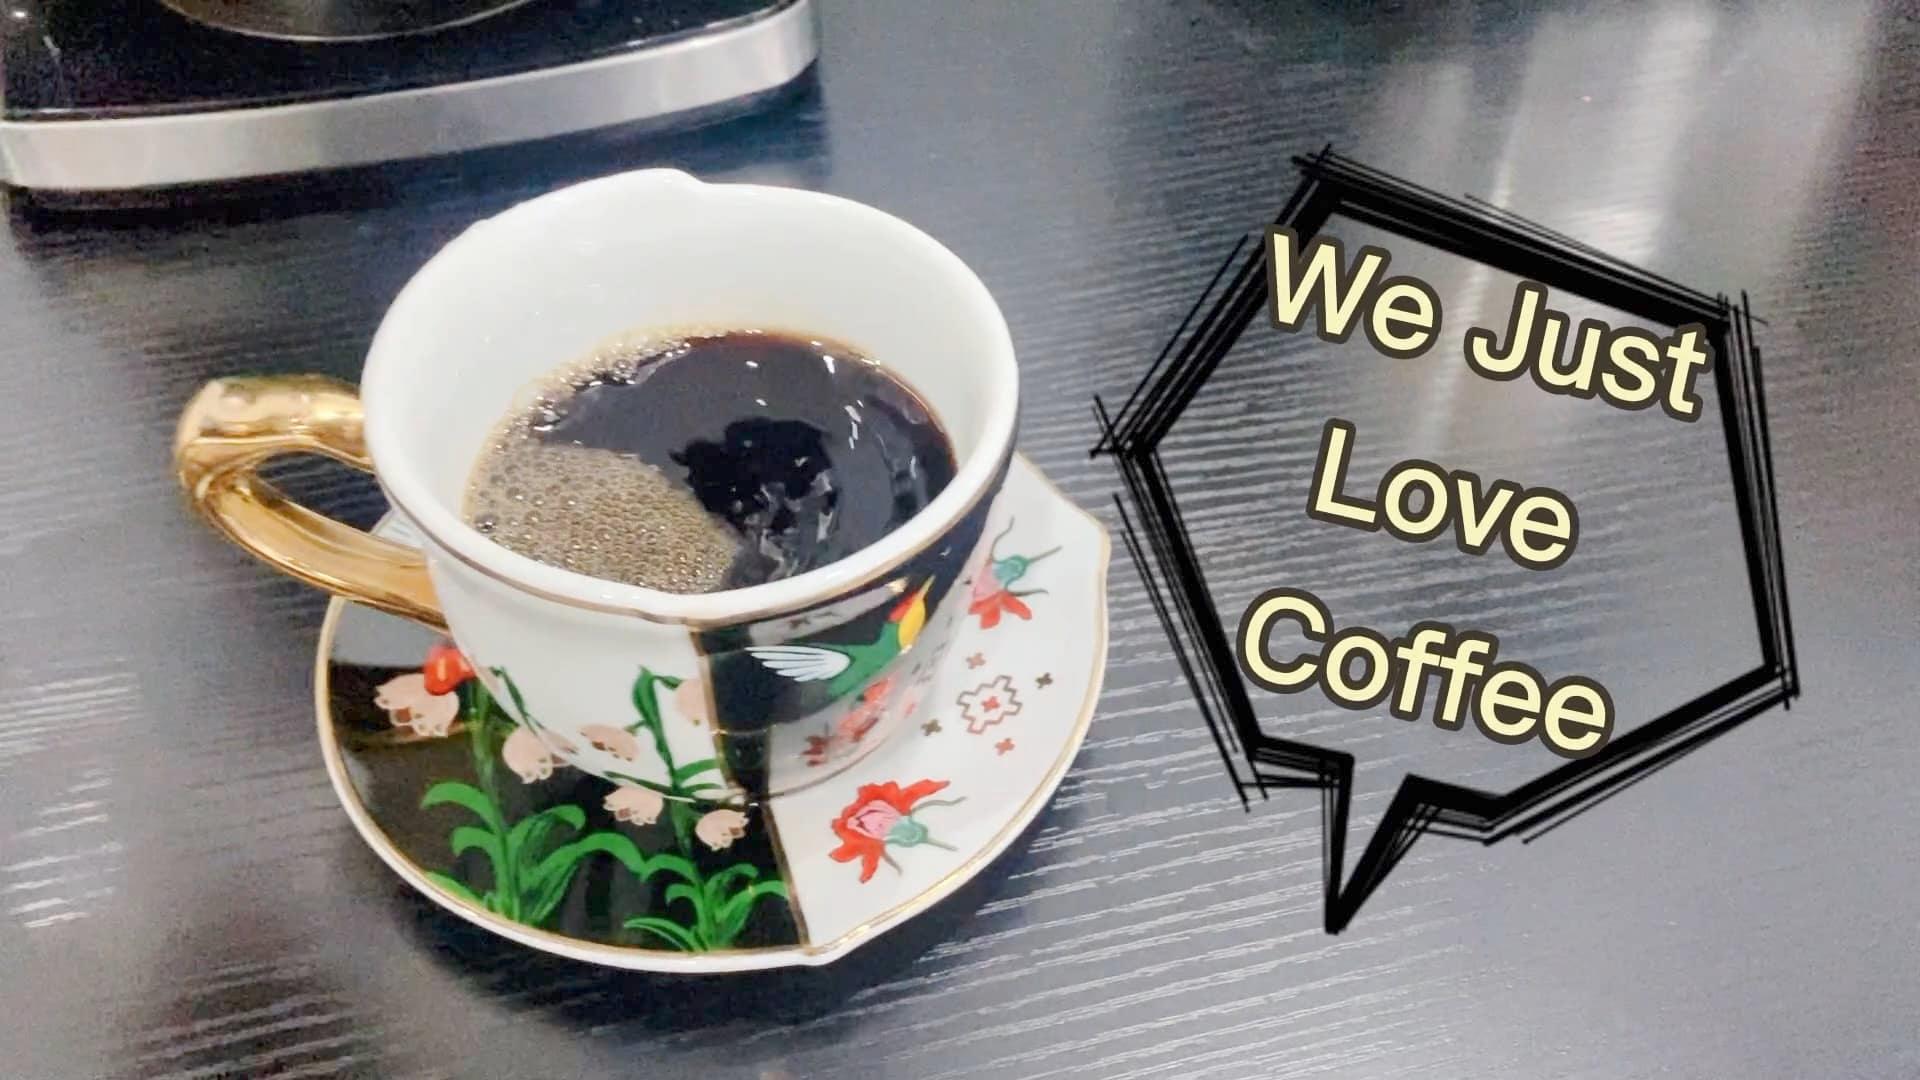 We just love coffee!